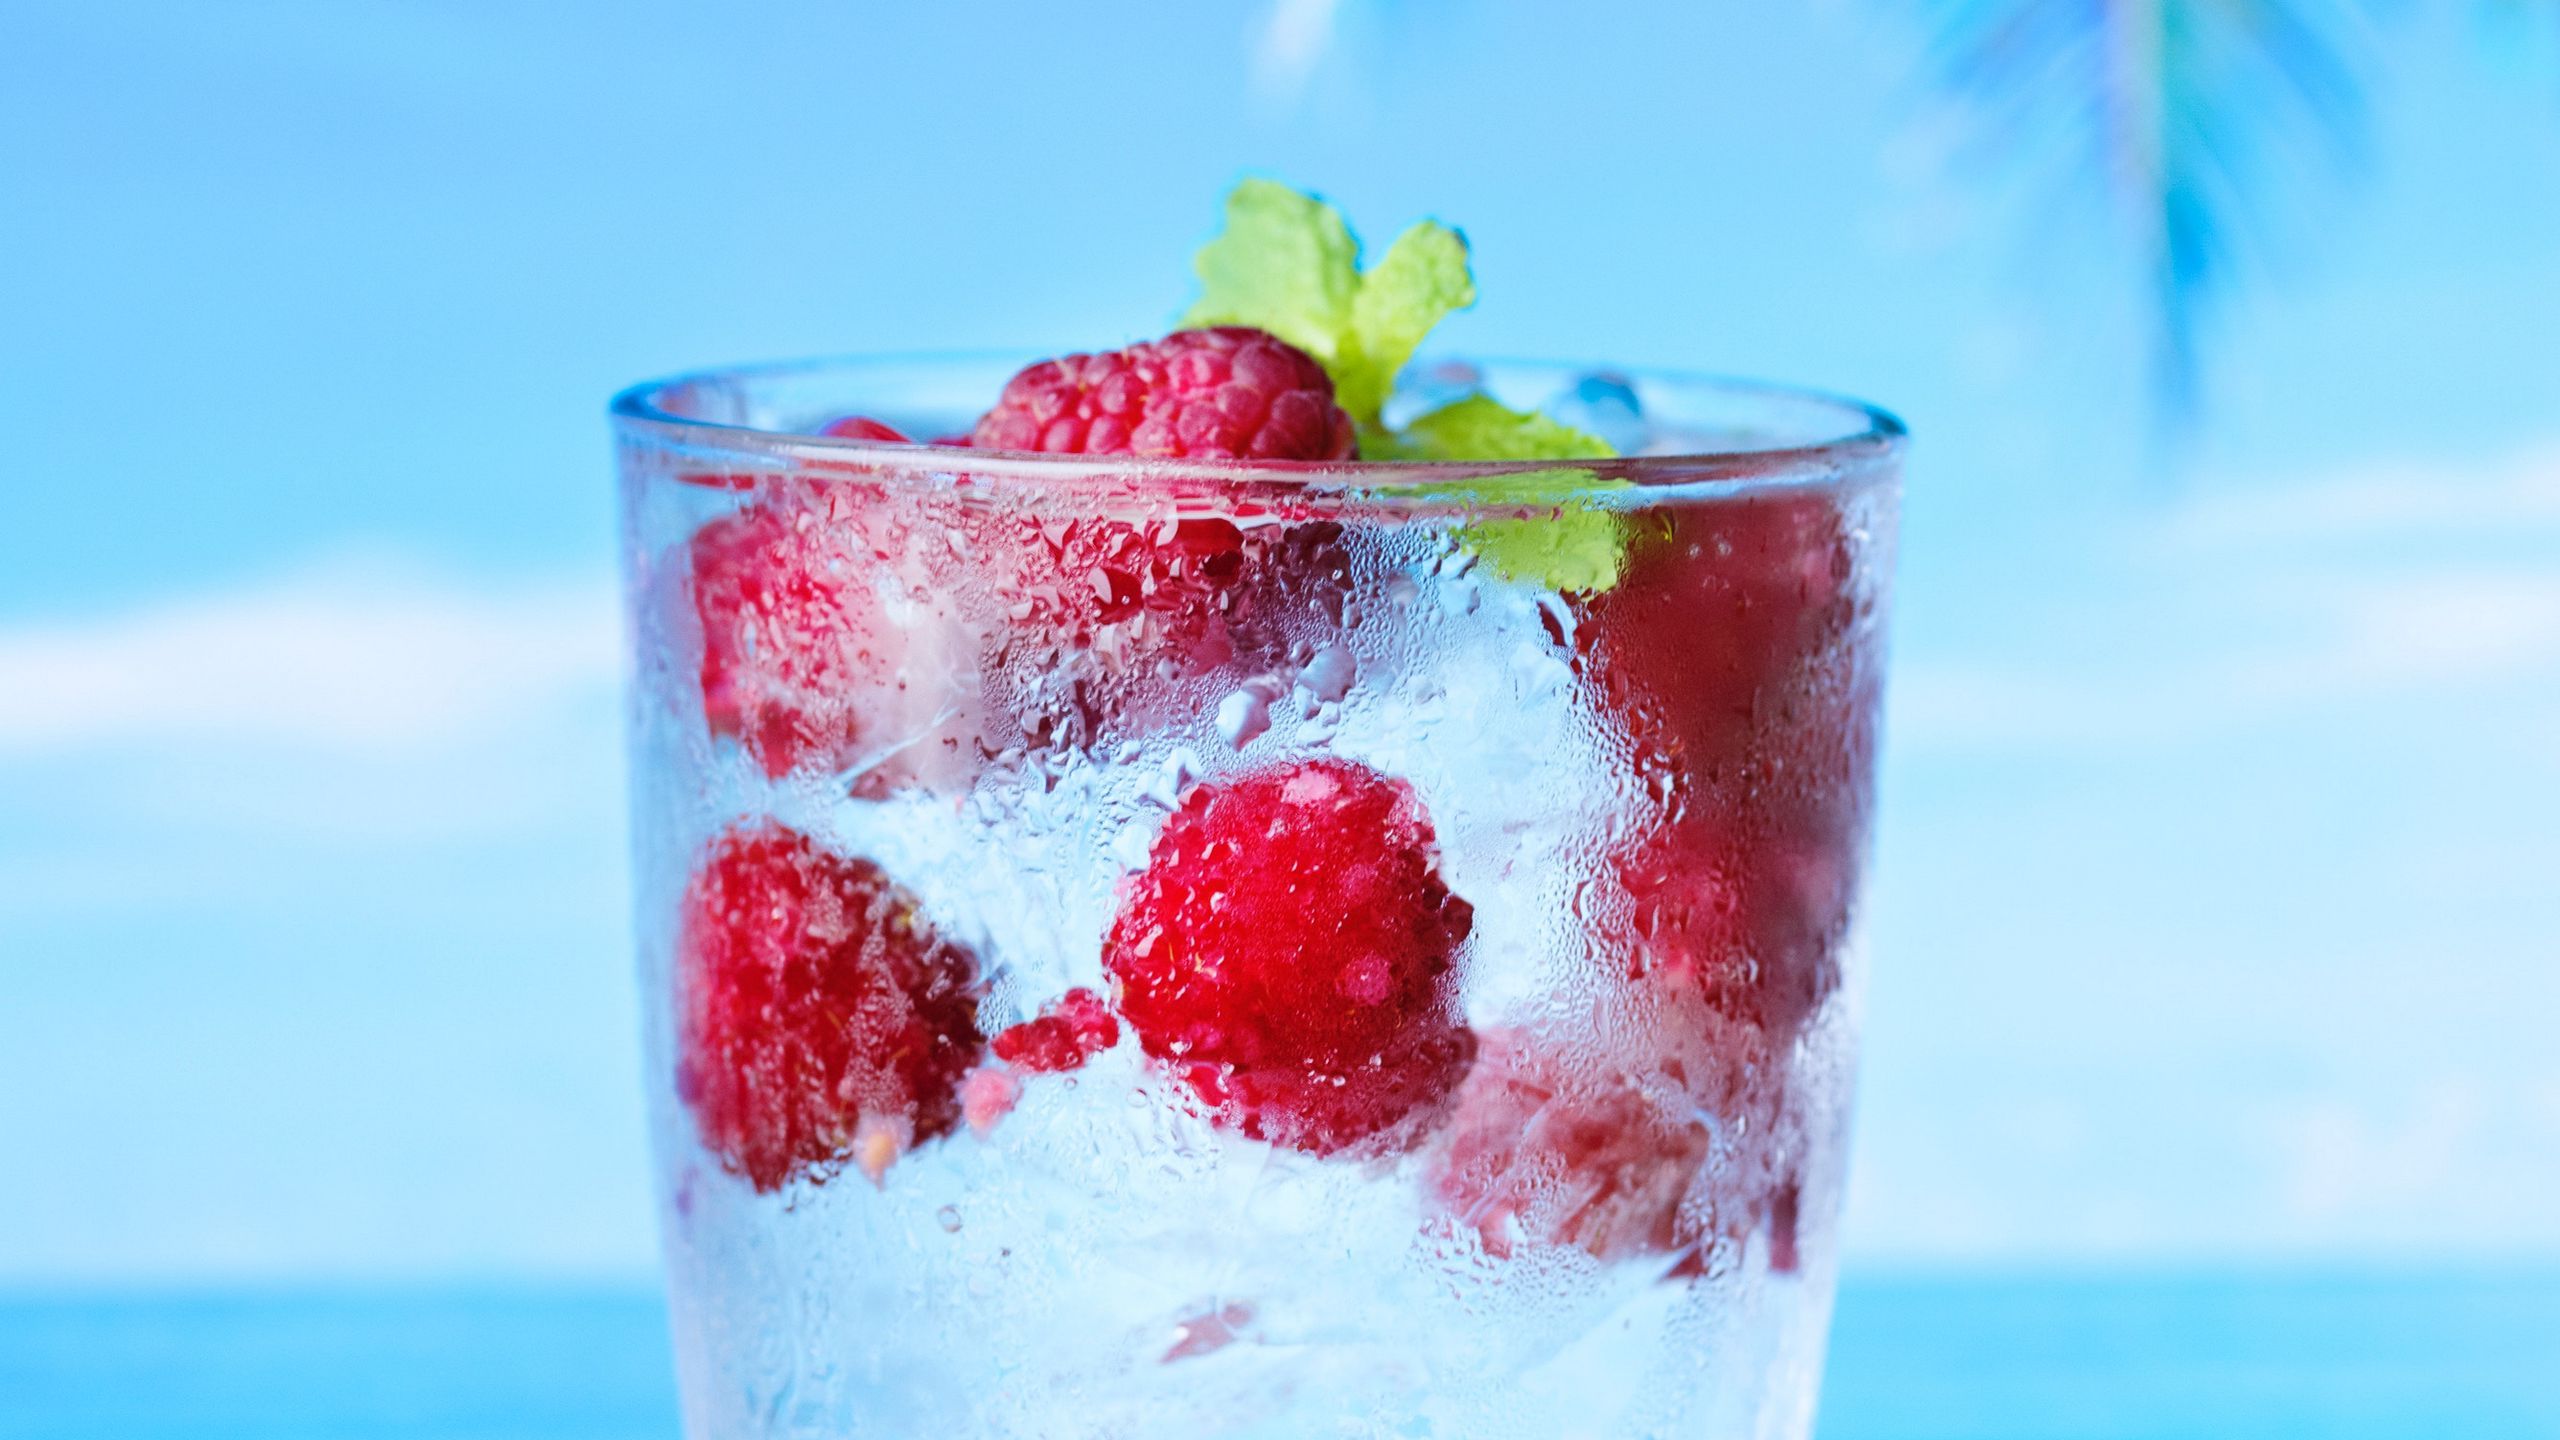 Download wallpaper 2560x1440 water, raspberry, drink, ice, drops, summer widescreen 16:9 HD background